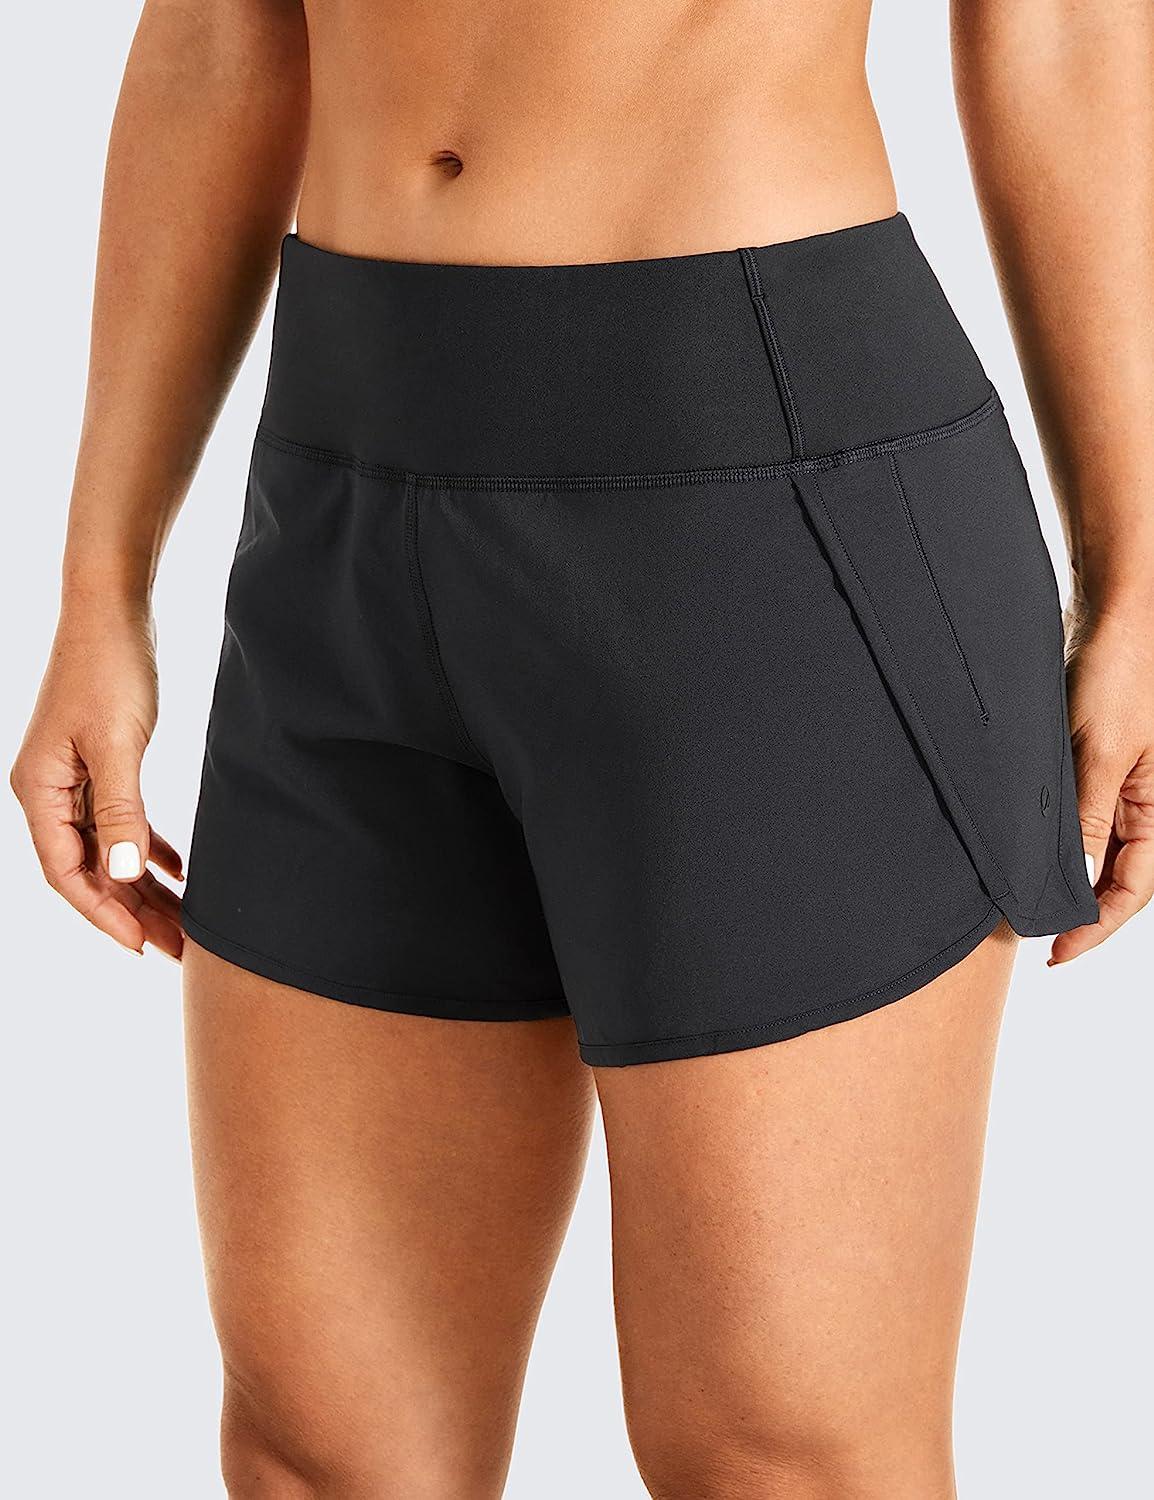 CRZ YOGA High Waisted Workout Shorts for Women - 4'' Mesh Liner Lightweight  Gym Athletic Shorts Running Sport Spandex Shorts Medium Black